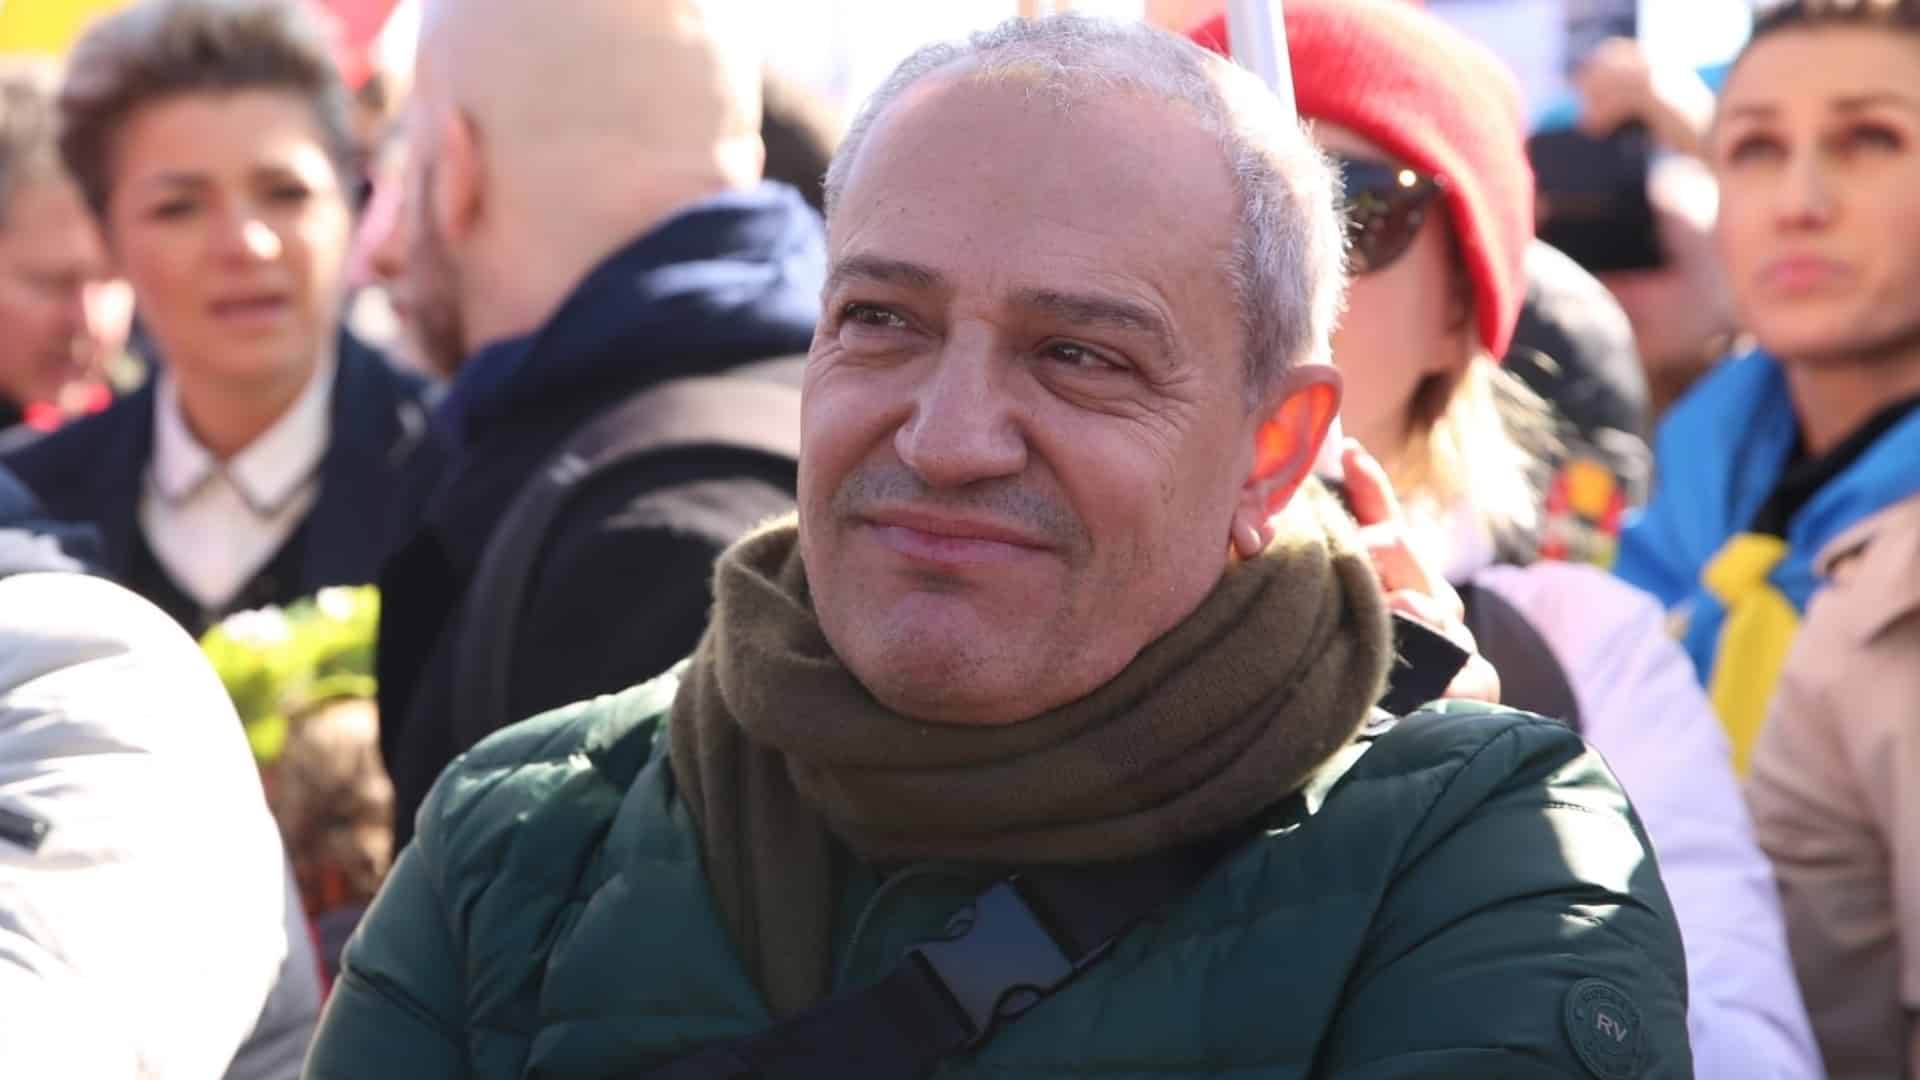 El cormelán Alfonso Pérez Cruz, alcalde de Ginebra | CEDIDA